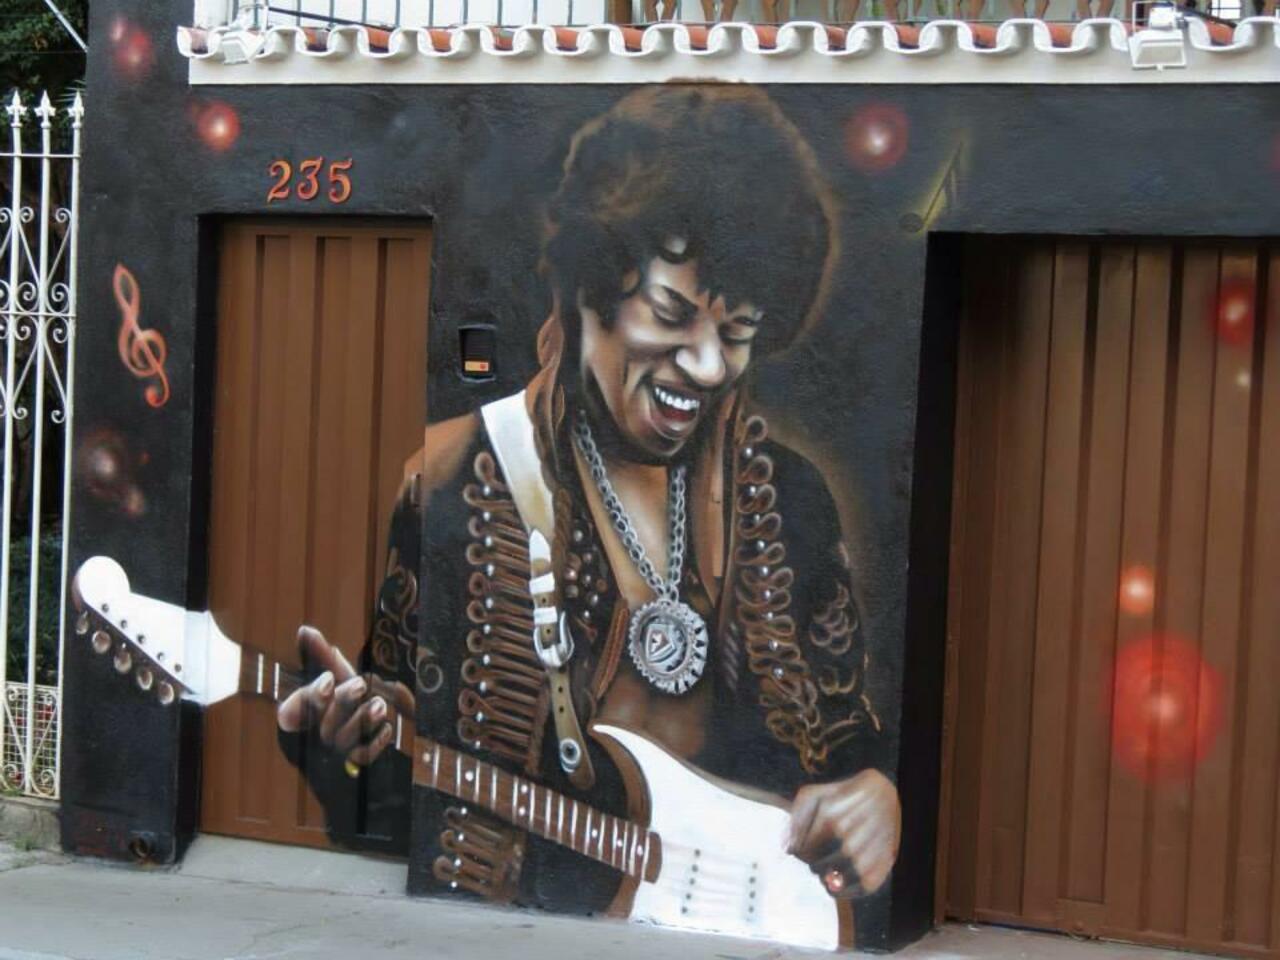 Jimi Hendrix Street Art by Nilo Zack 

#art #arte #graffiti #streetart http://t.co/tWqEss68sQ